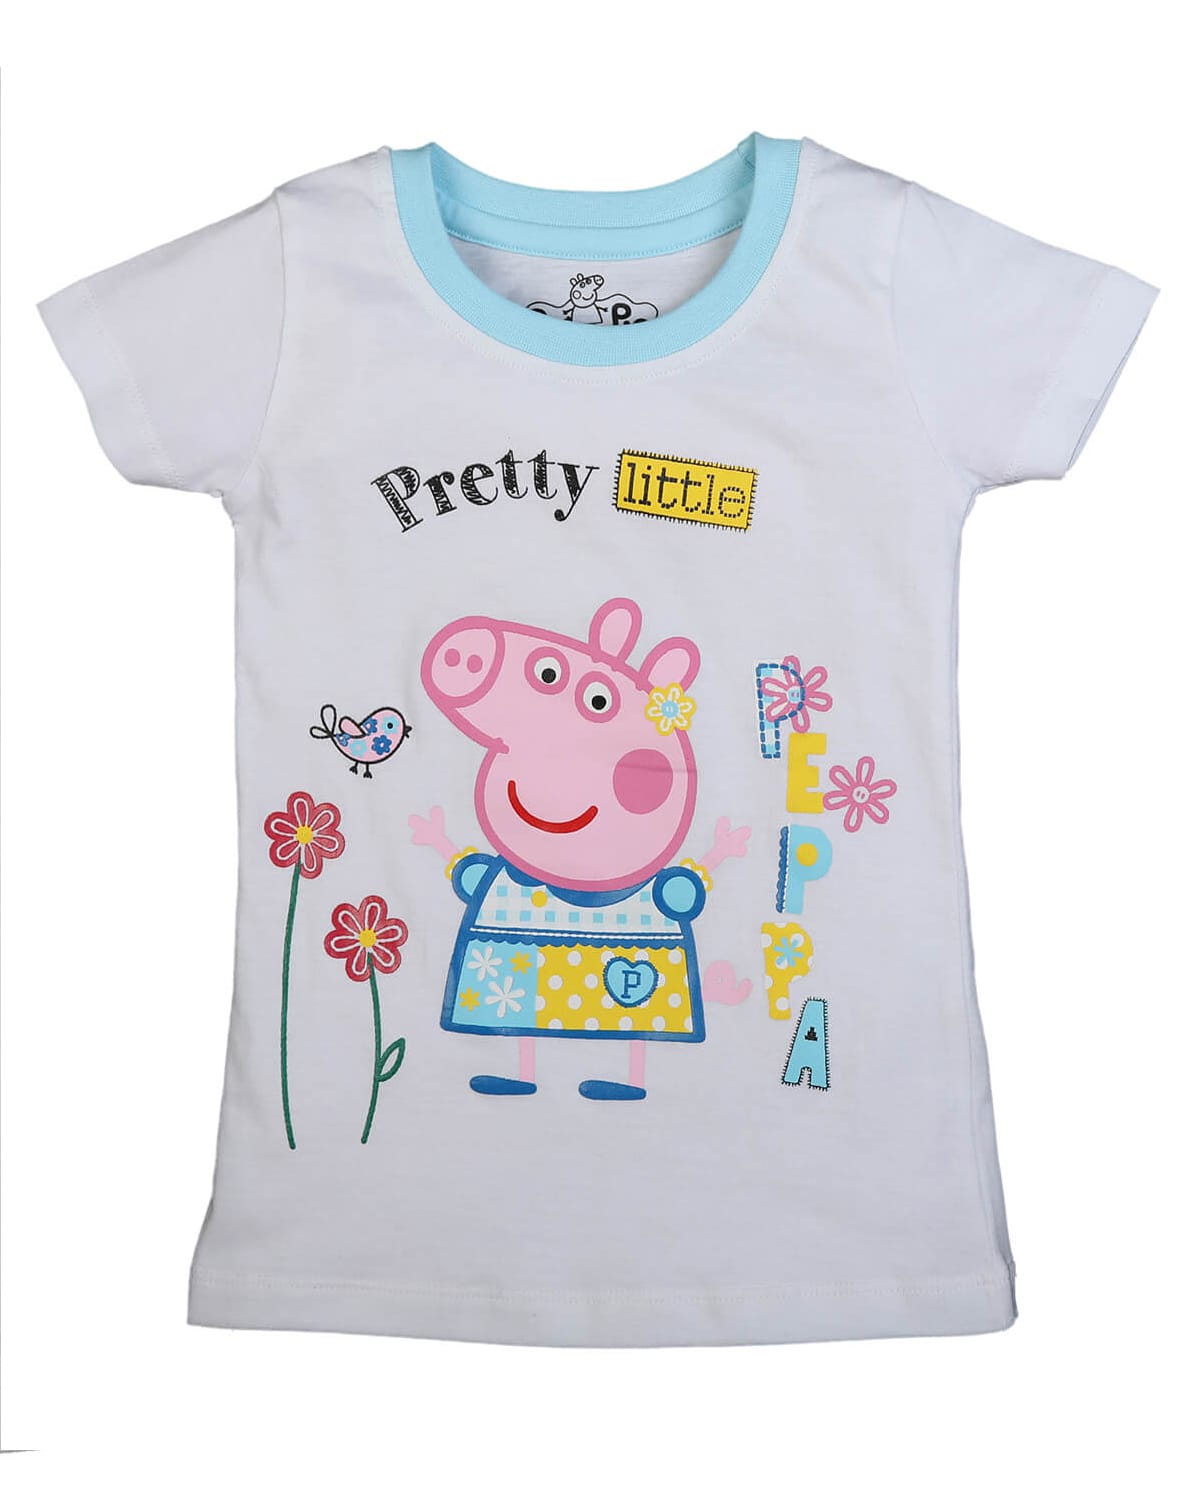 Peppa Pig T-Shirt White Hopscotch Play